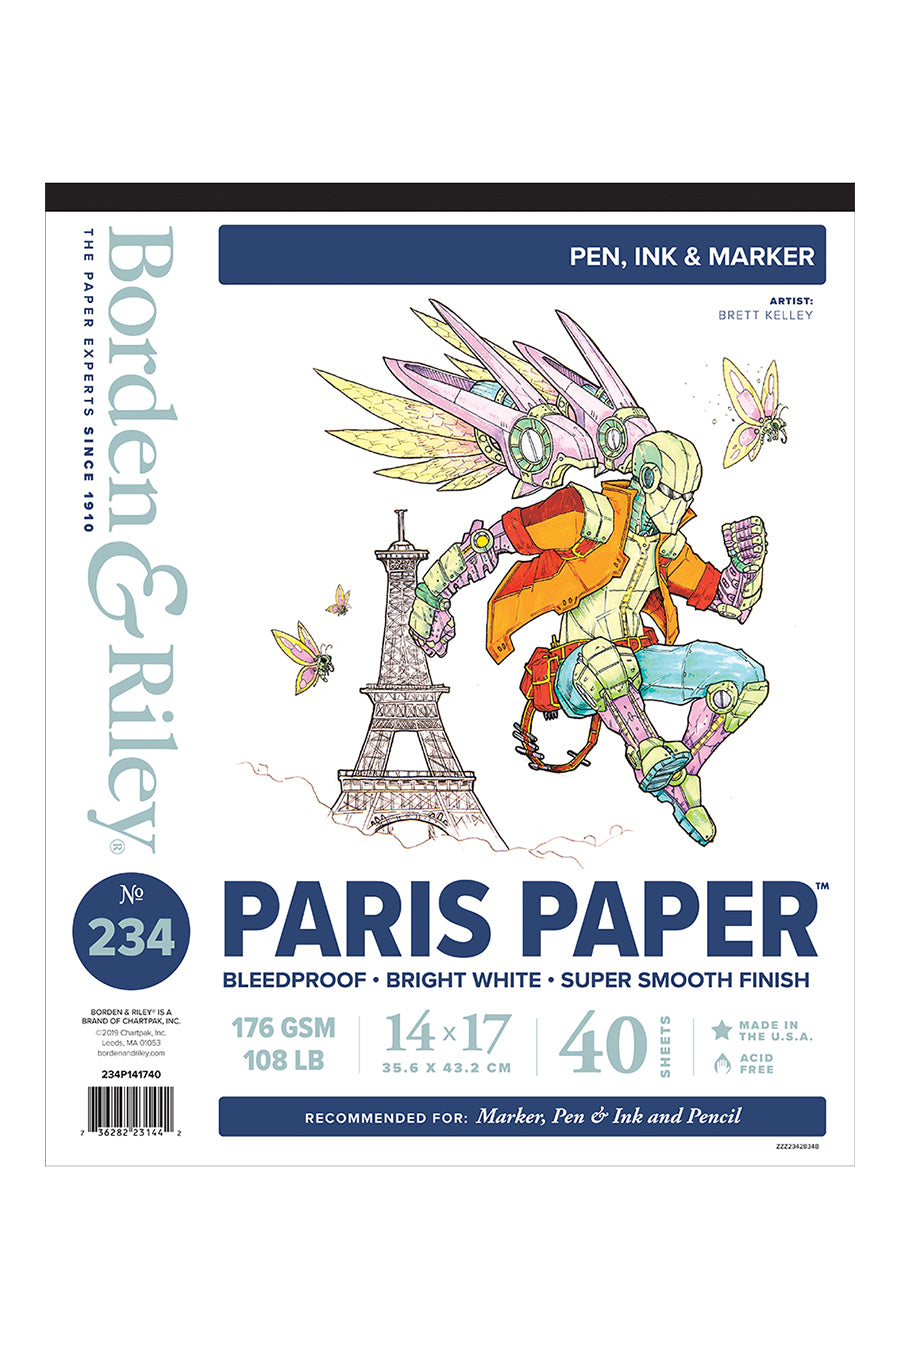 234 Paris Paper, 14x17 Drawing Pad